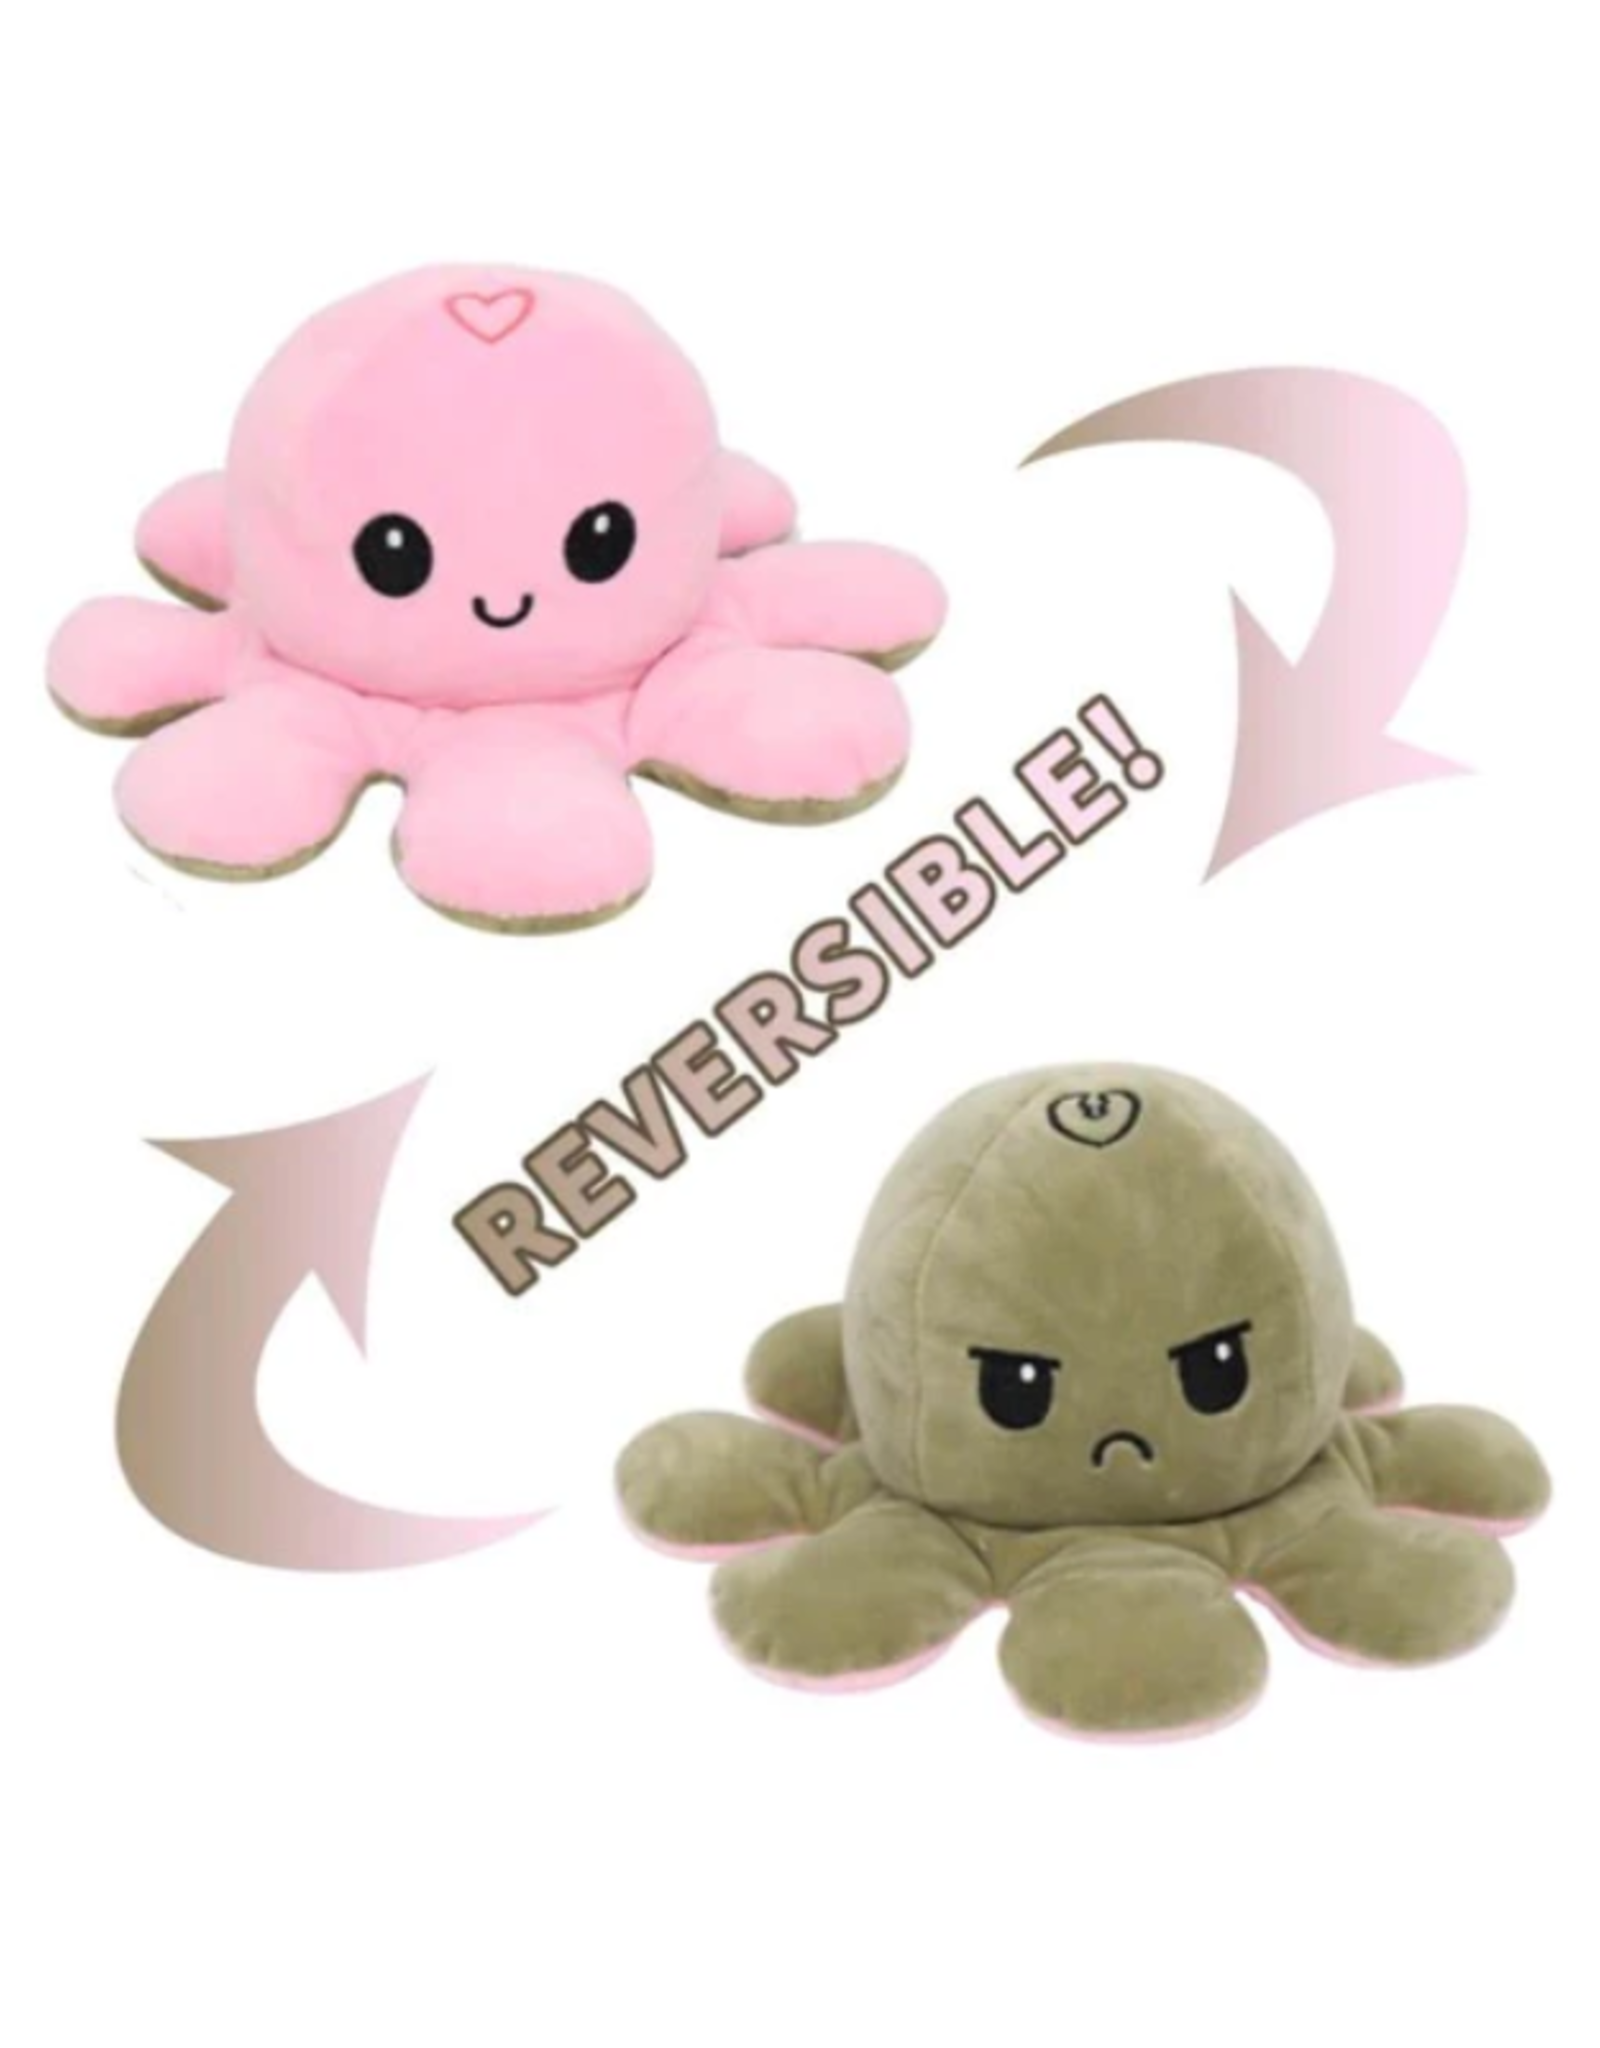 TeeTurtle Reversible Octopus Mini Plush: Heart/Broken Heart